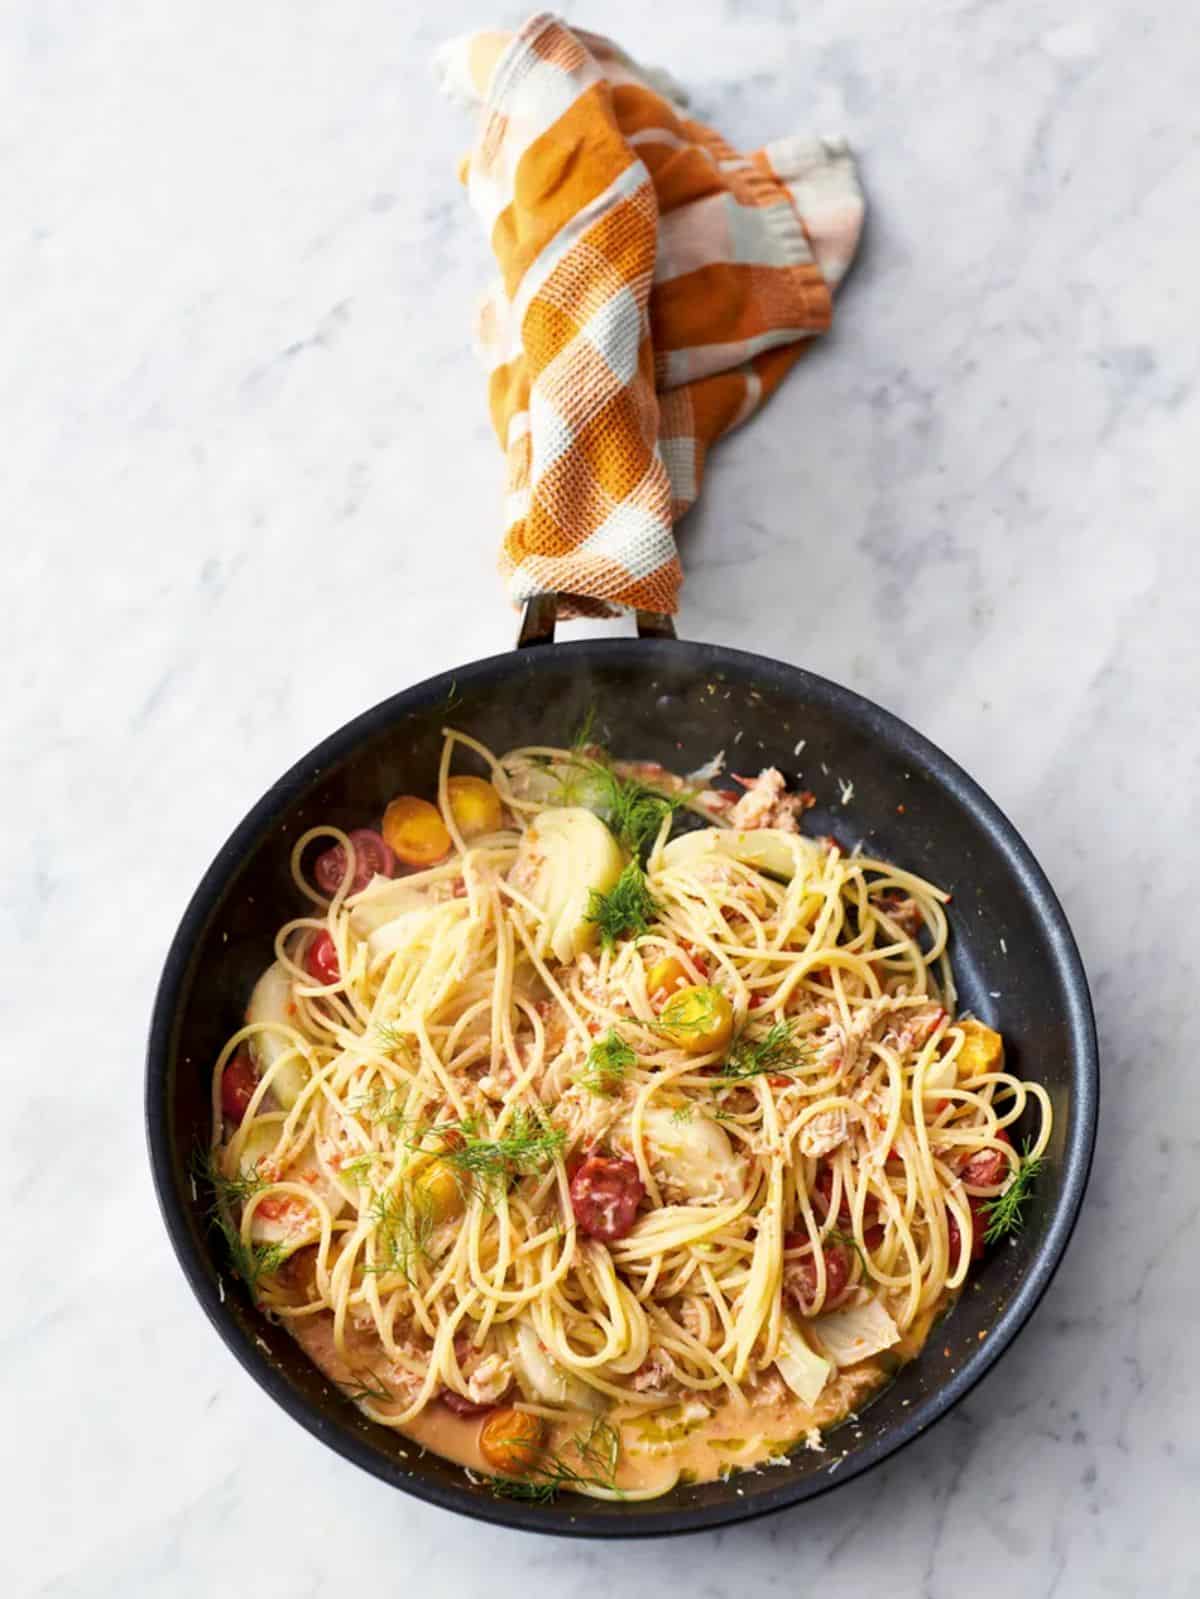 Healthy crab and fennel spaghetti in a black skillet.